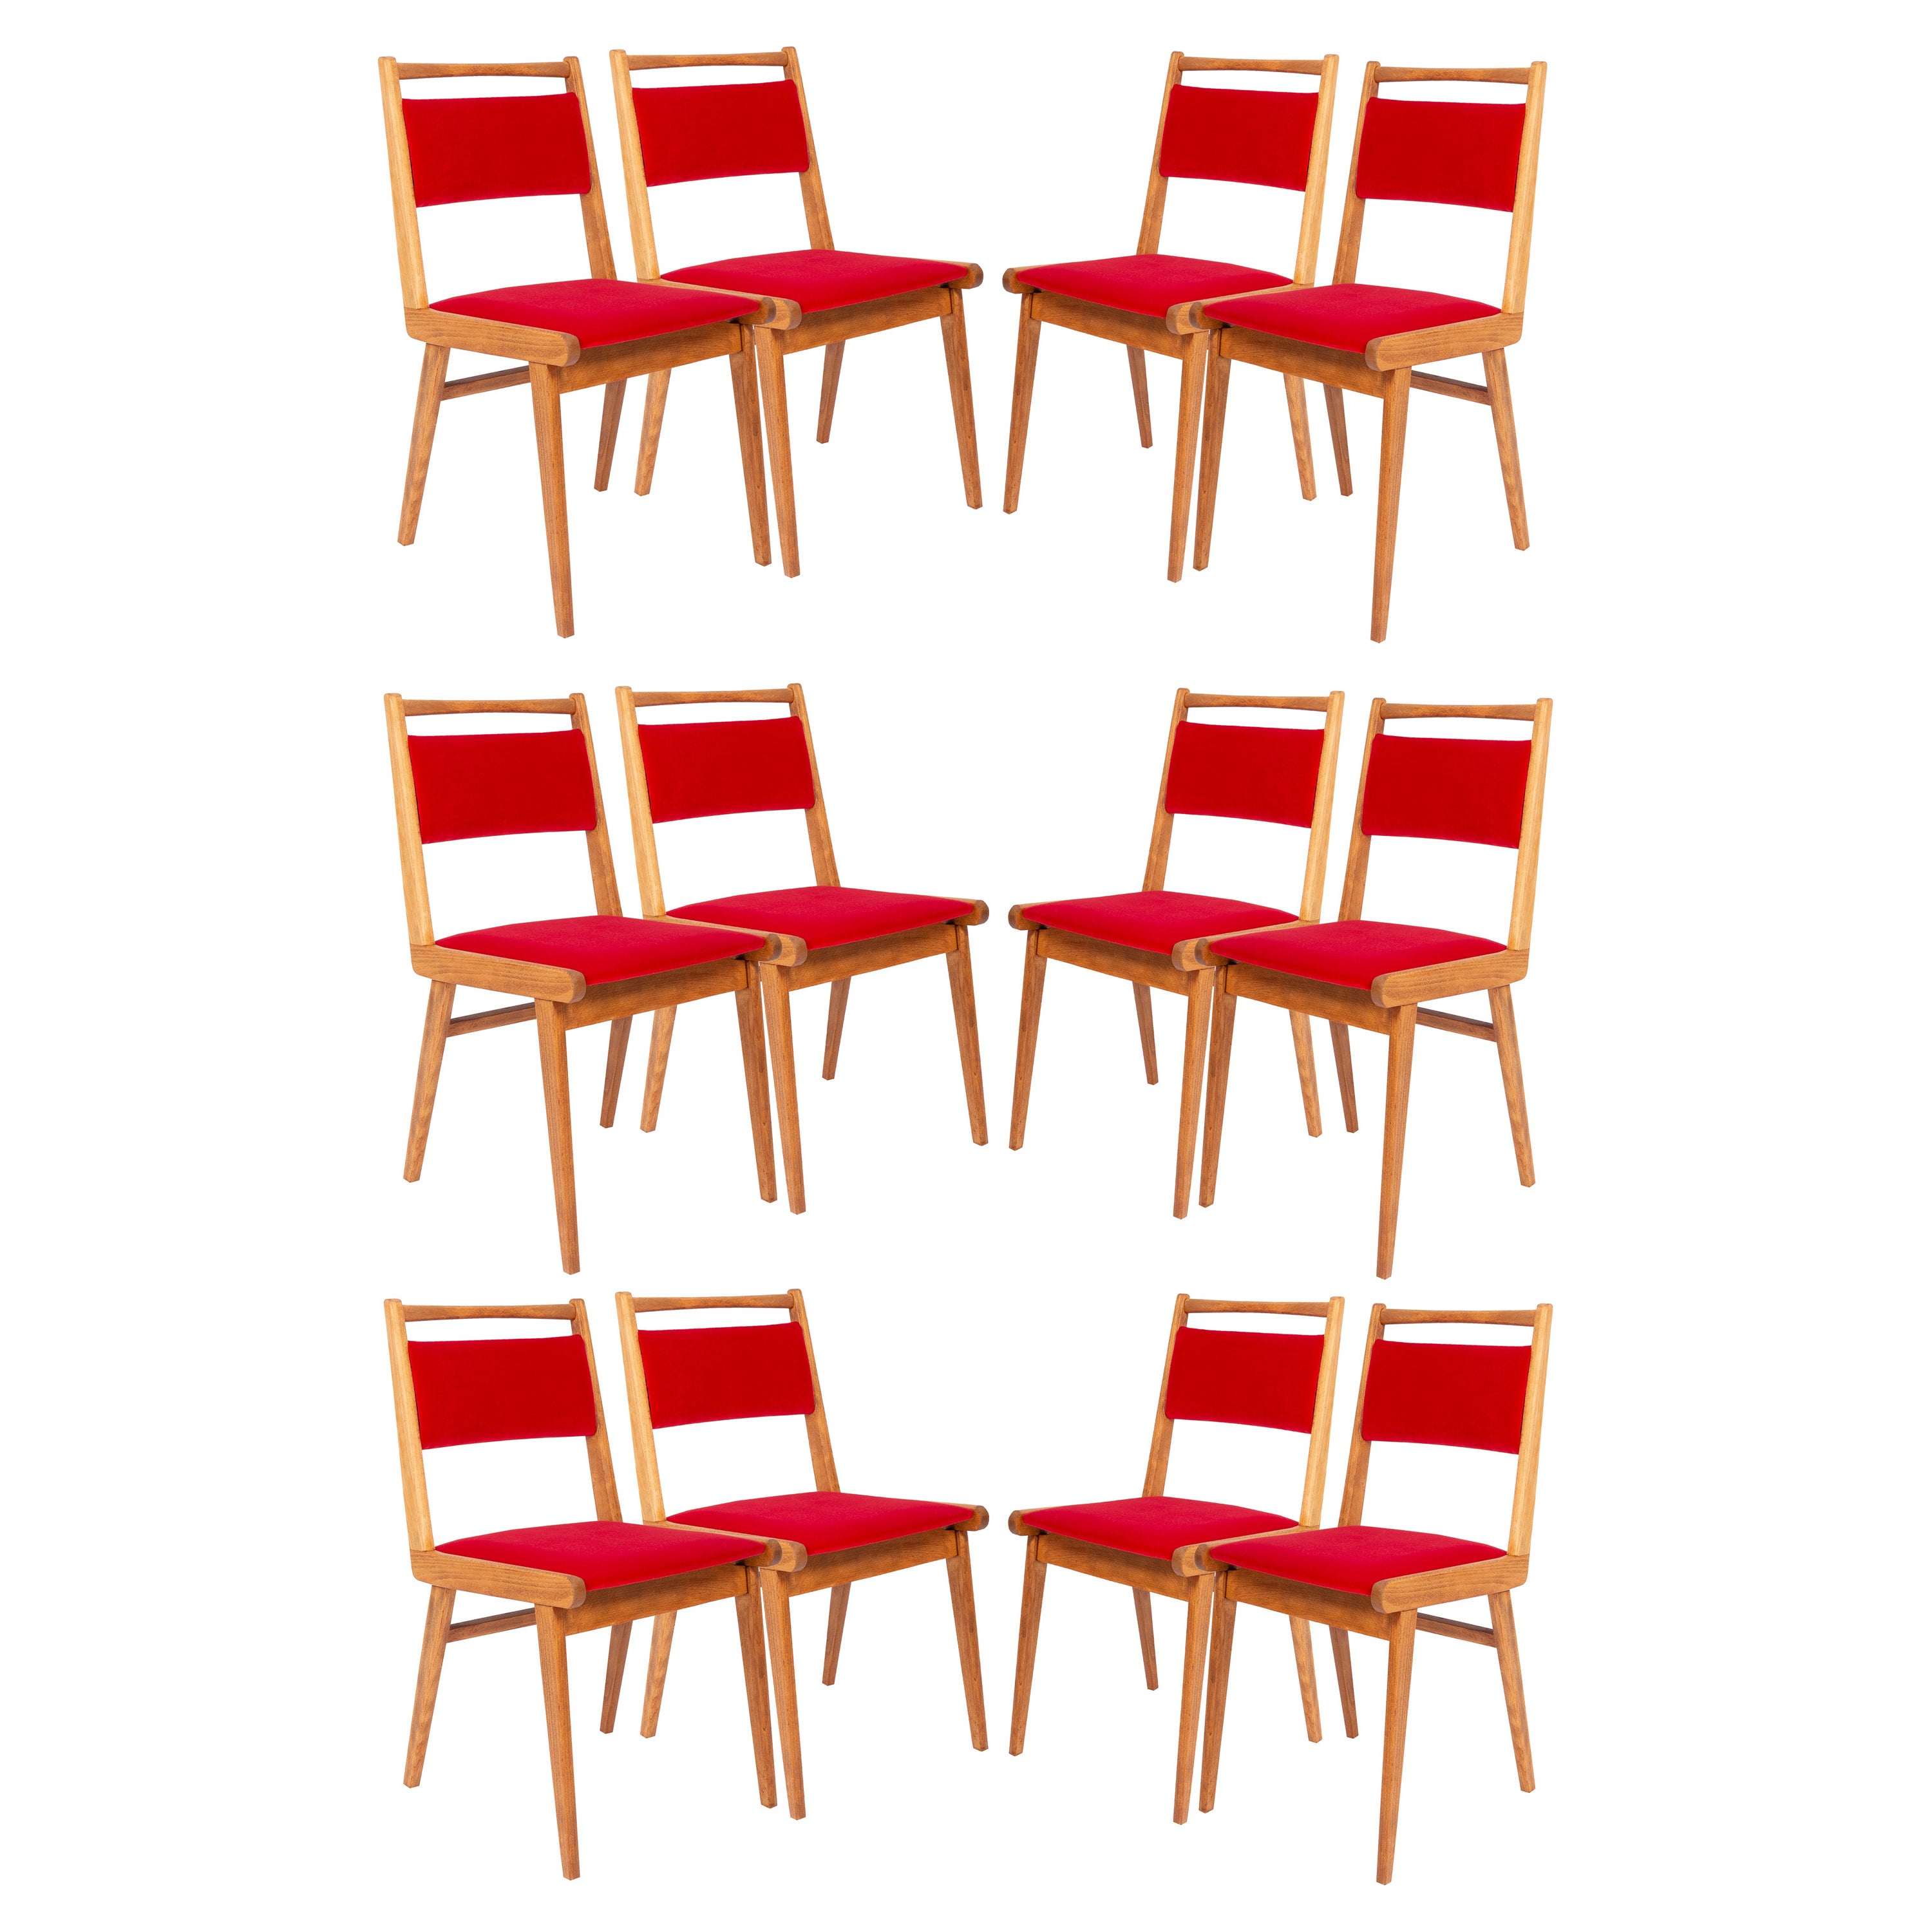 Set of Twelve 20th Century Red Velvet Chairs, by Rajmund Halas, Poland, 1960s